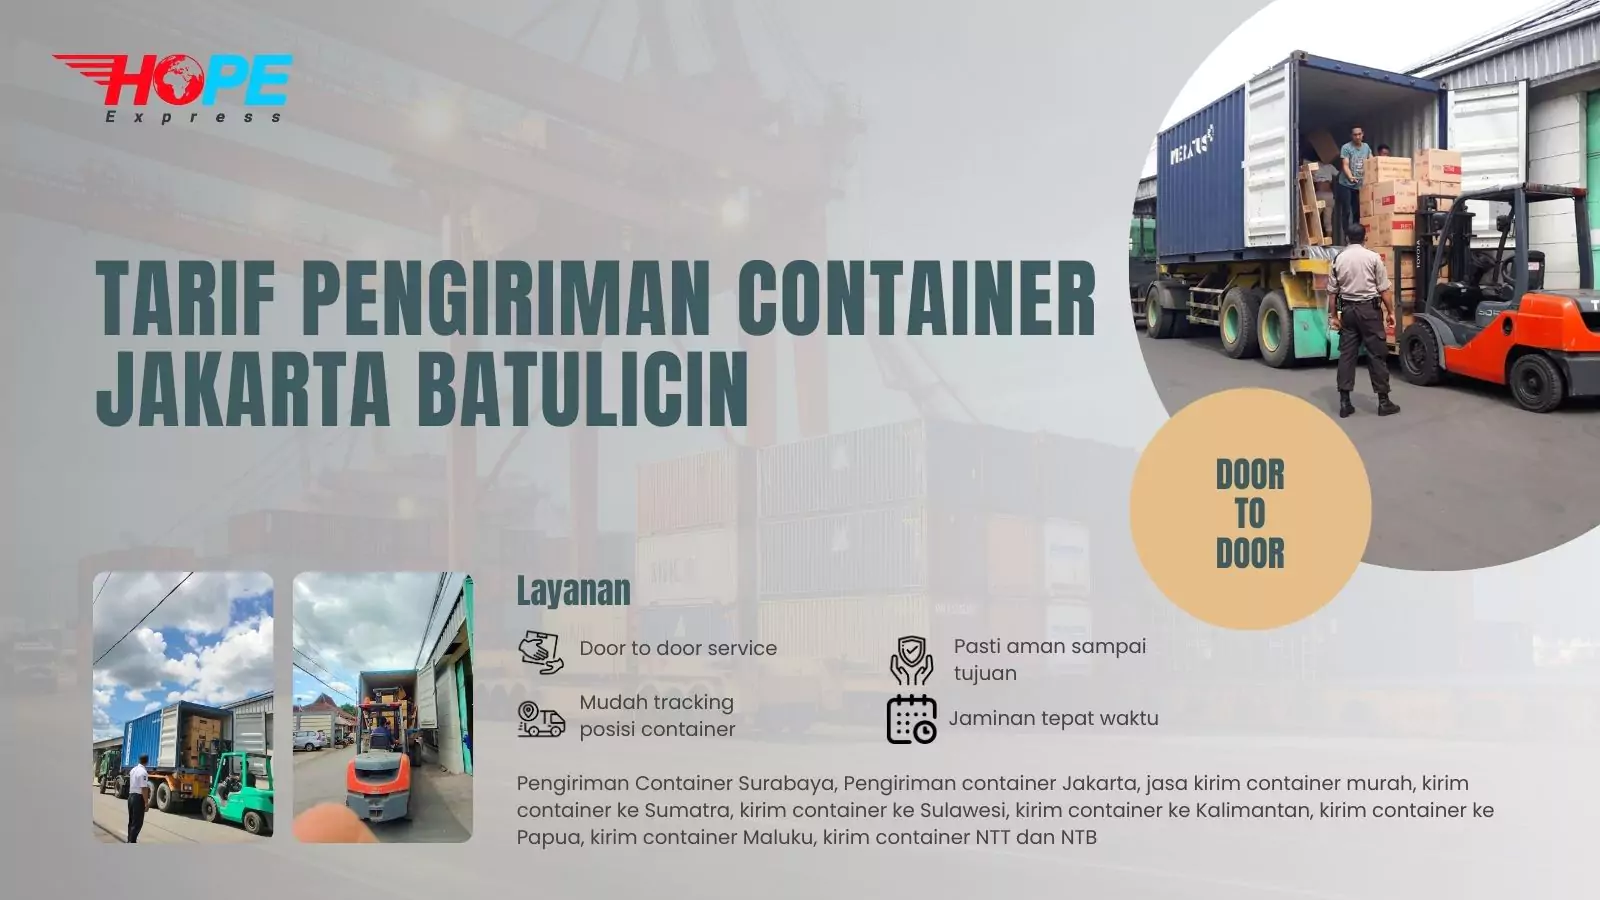 Tarif Pengiriman Container Jakarta Batulicin